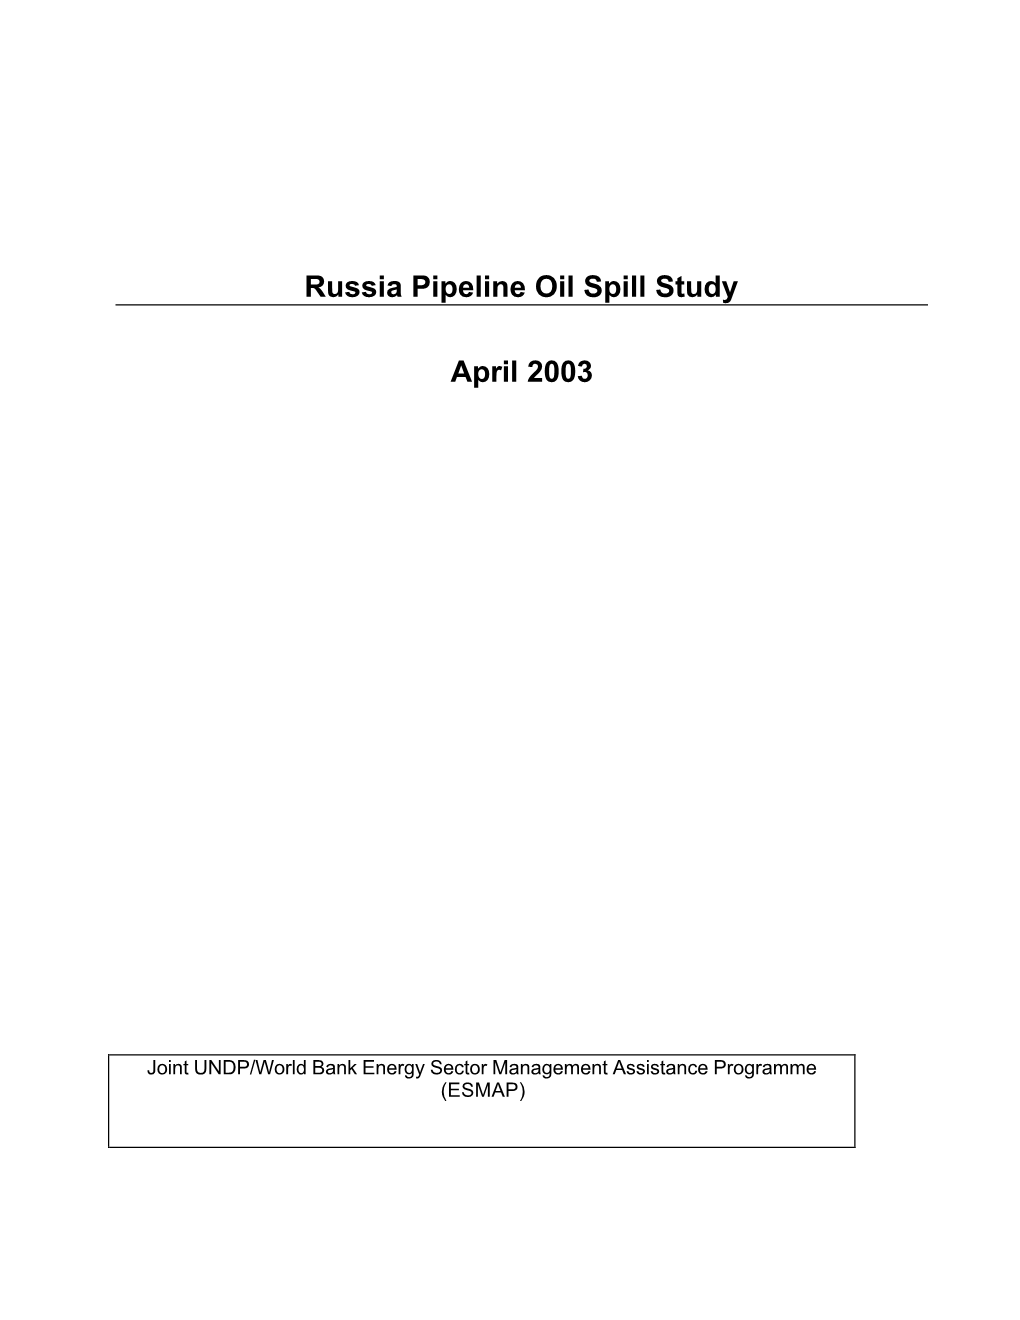 Russia Pipeline Oil Spill Study April 2003